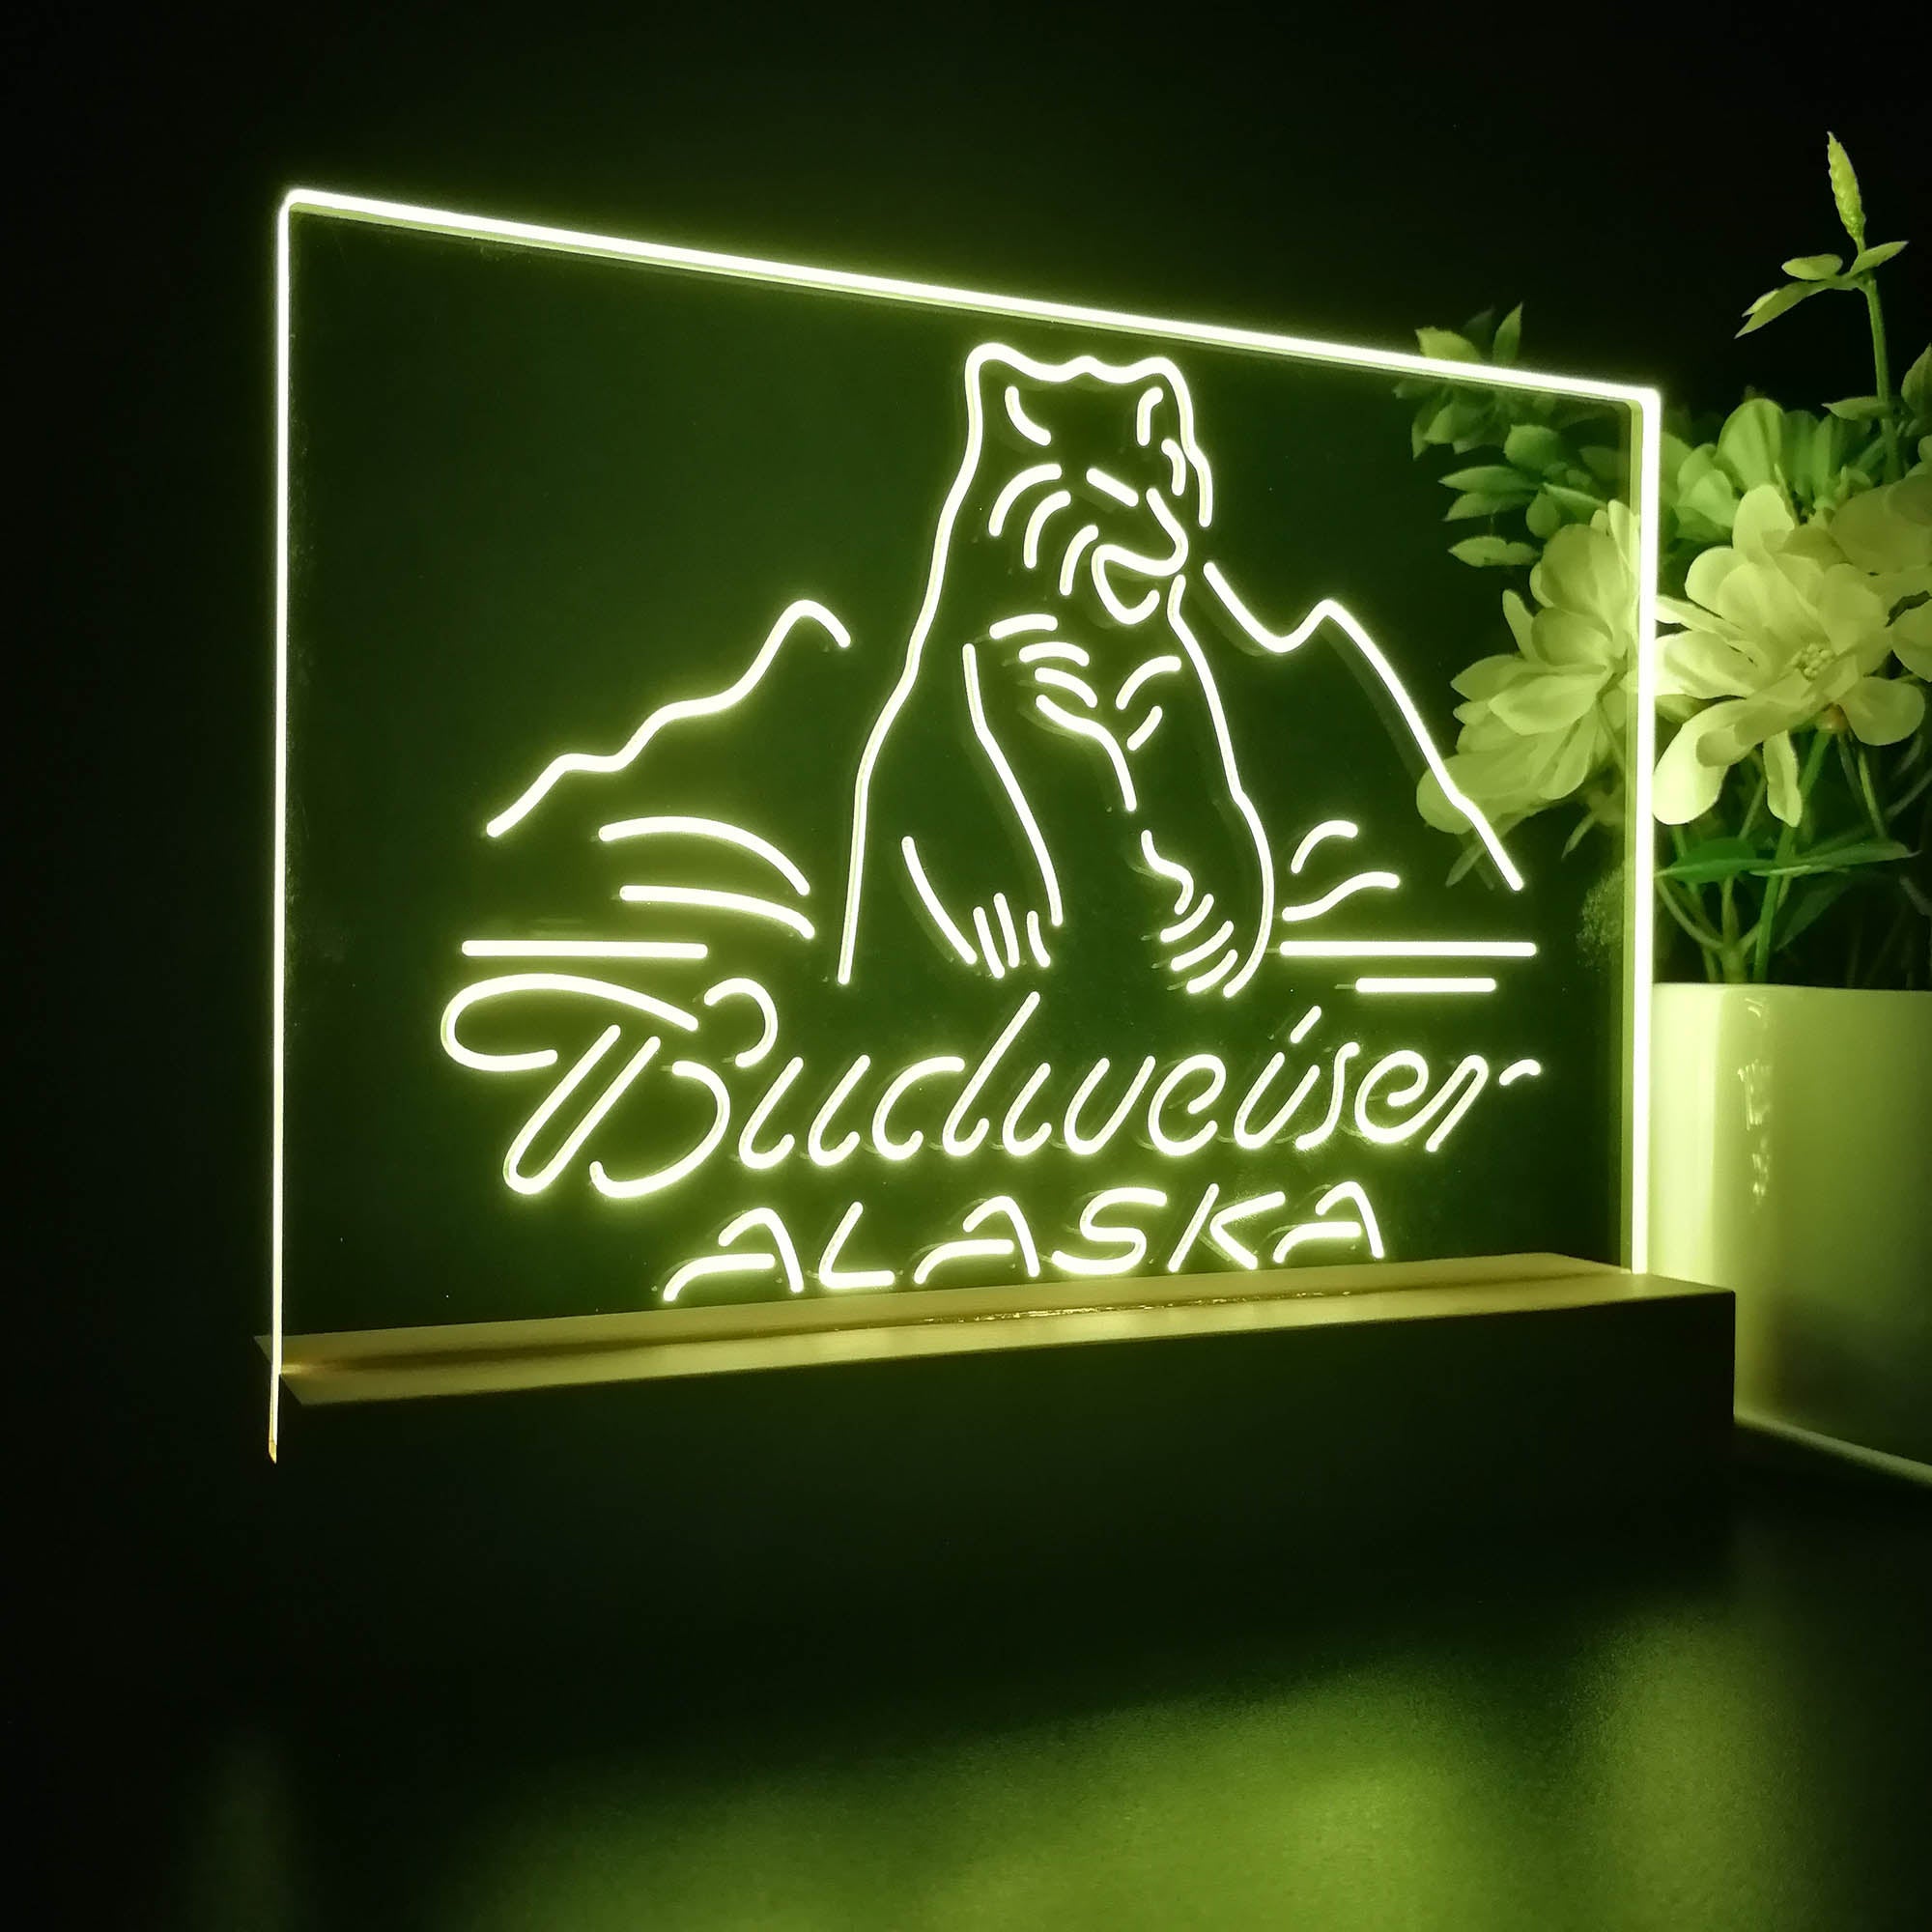 Budweiser Alsaka Polar Bear Beer Night Light LED Sign